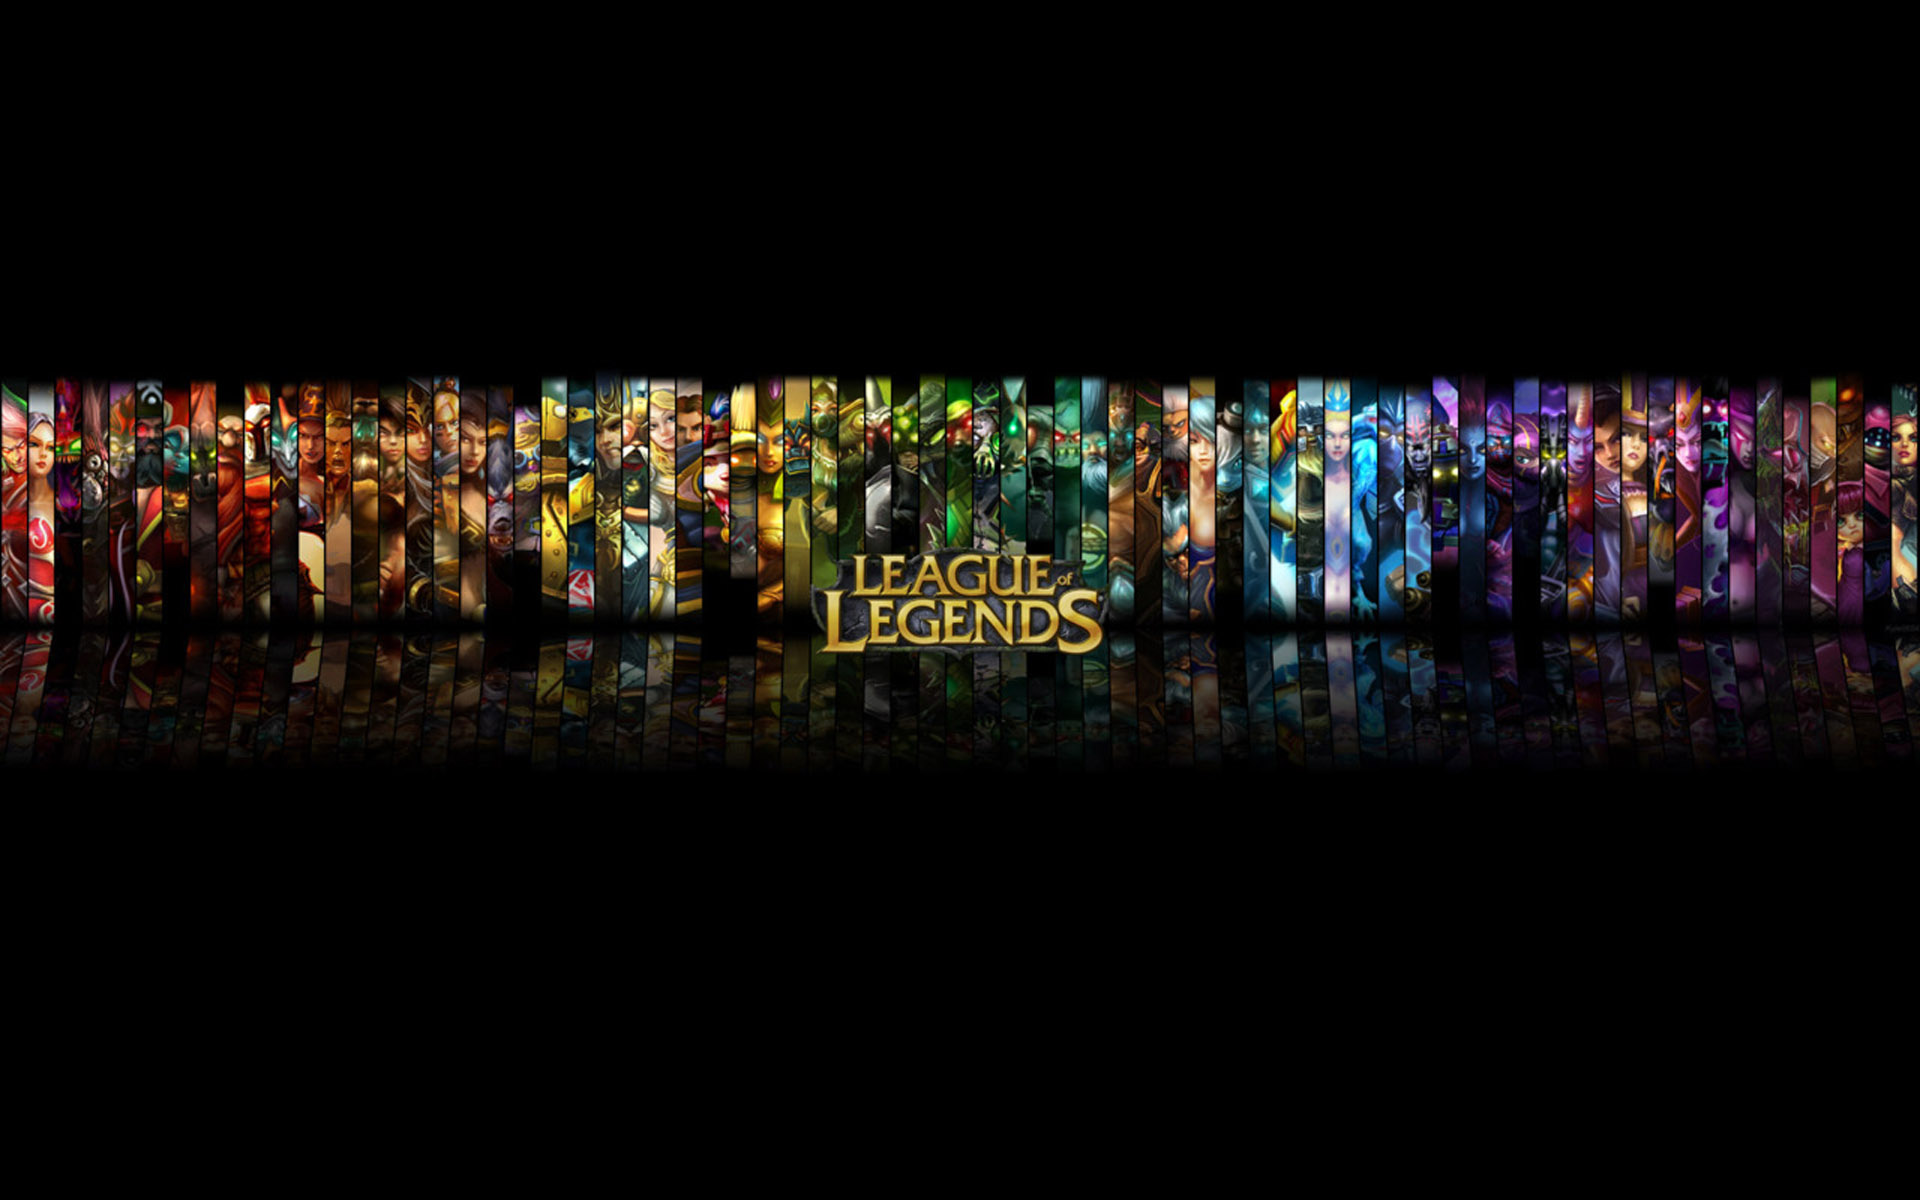  of Legends Negre Context League of Legends Negre Context wallpapers